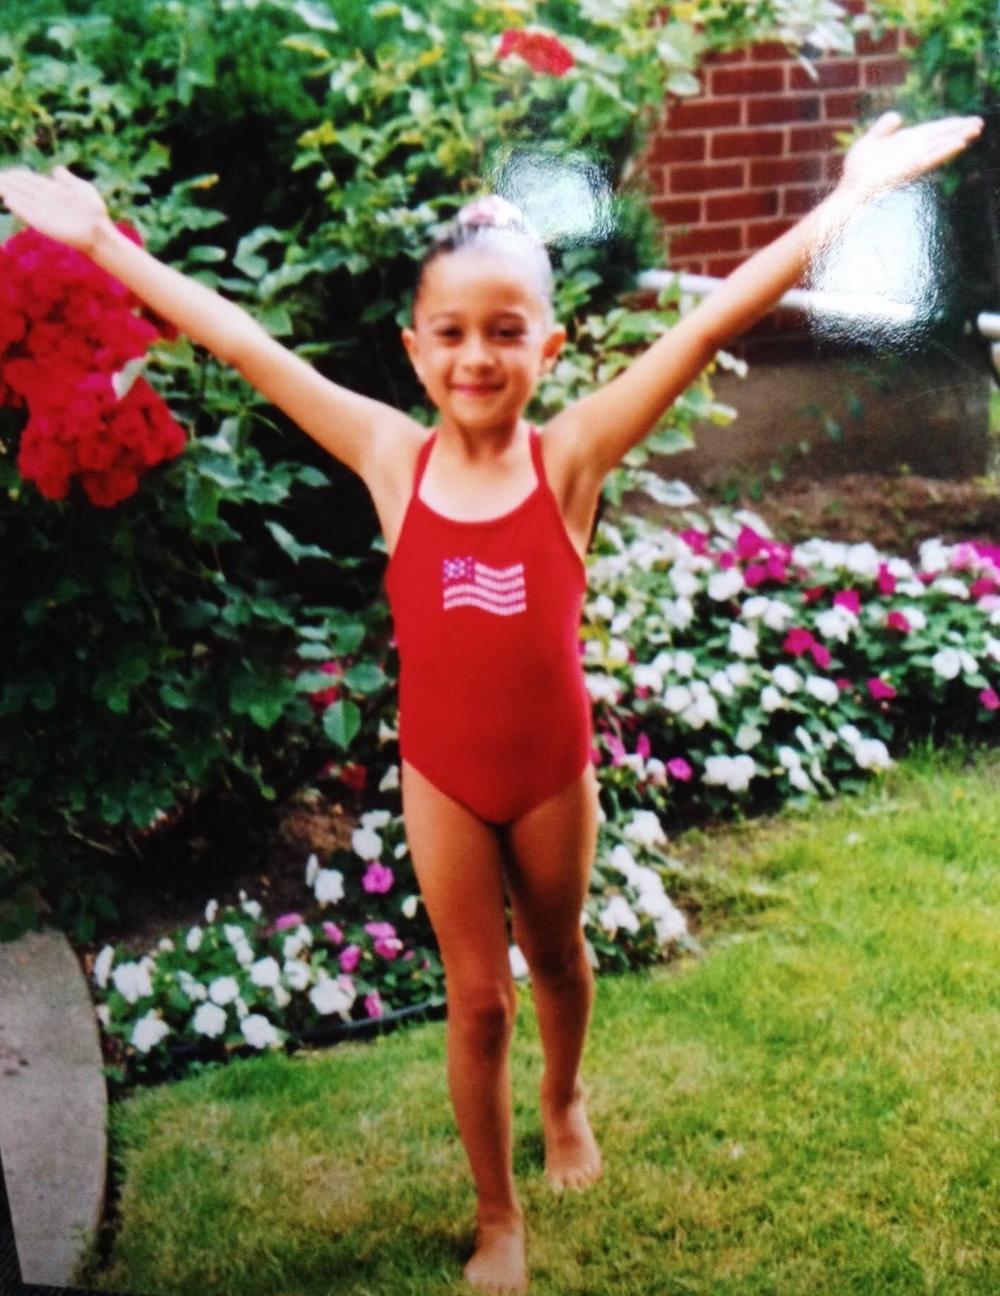 Anita Alvarez began her artistic swimming career at age 5. Here she's at home in Kenmore, New York at age 6.